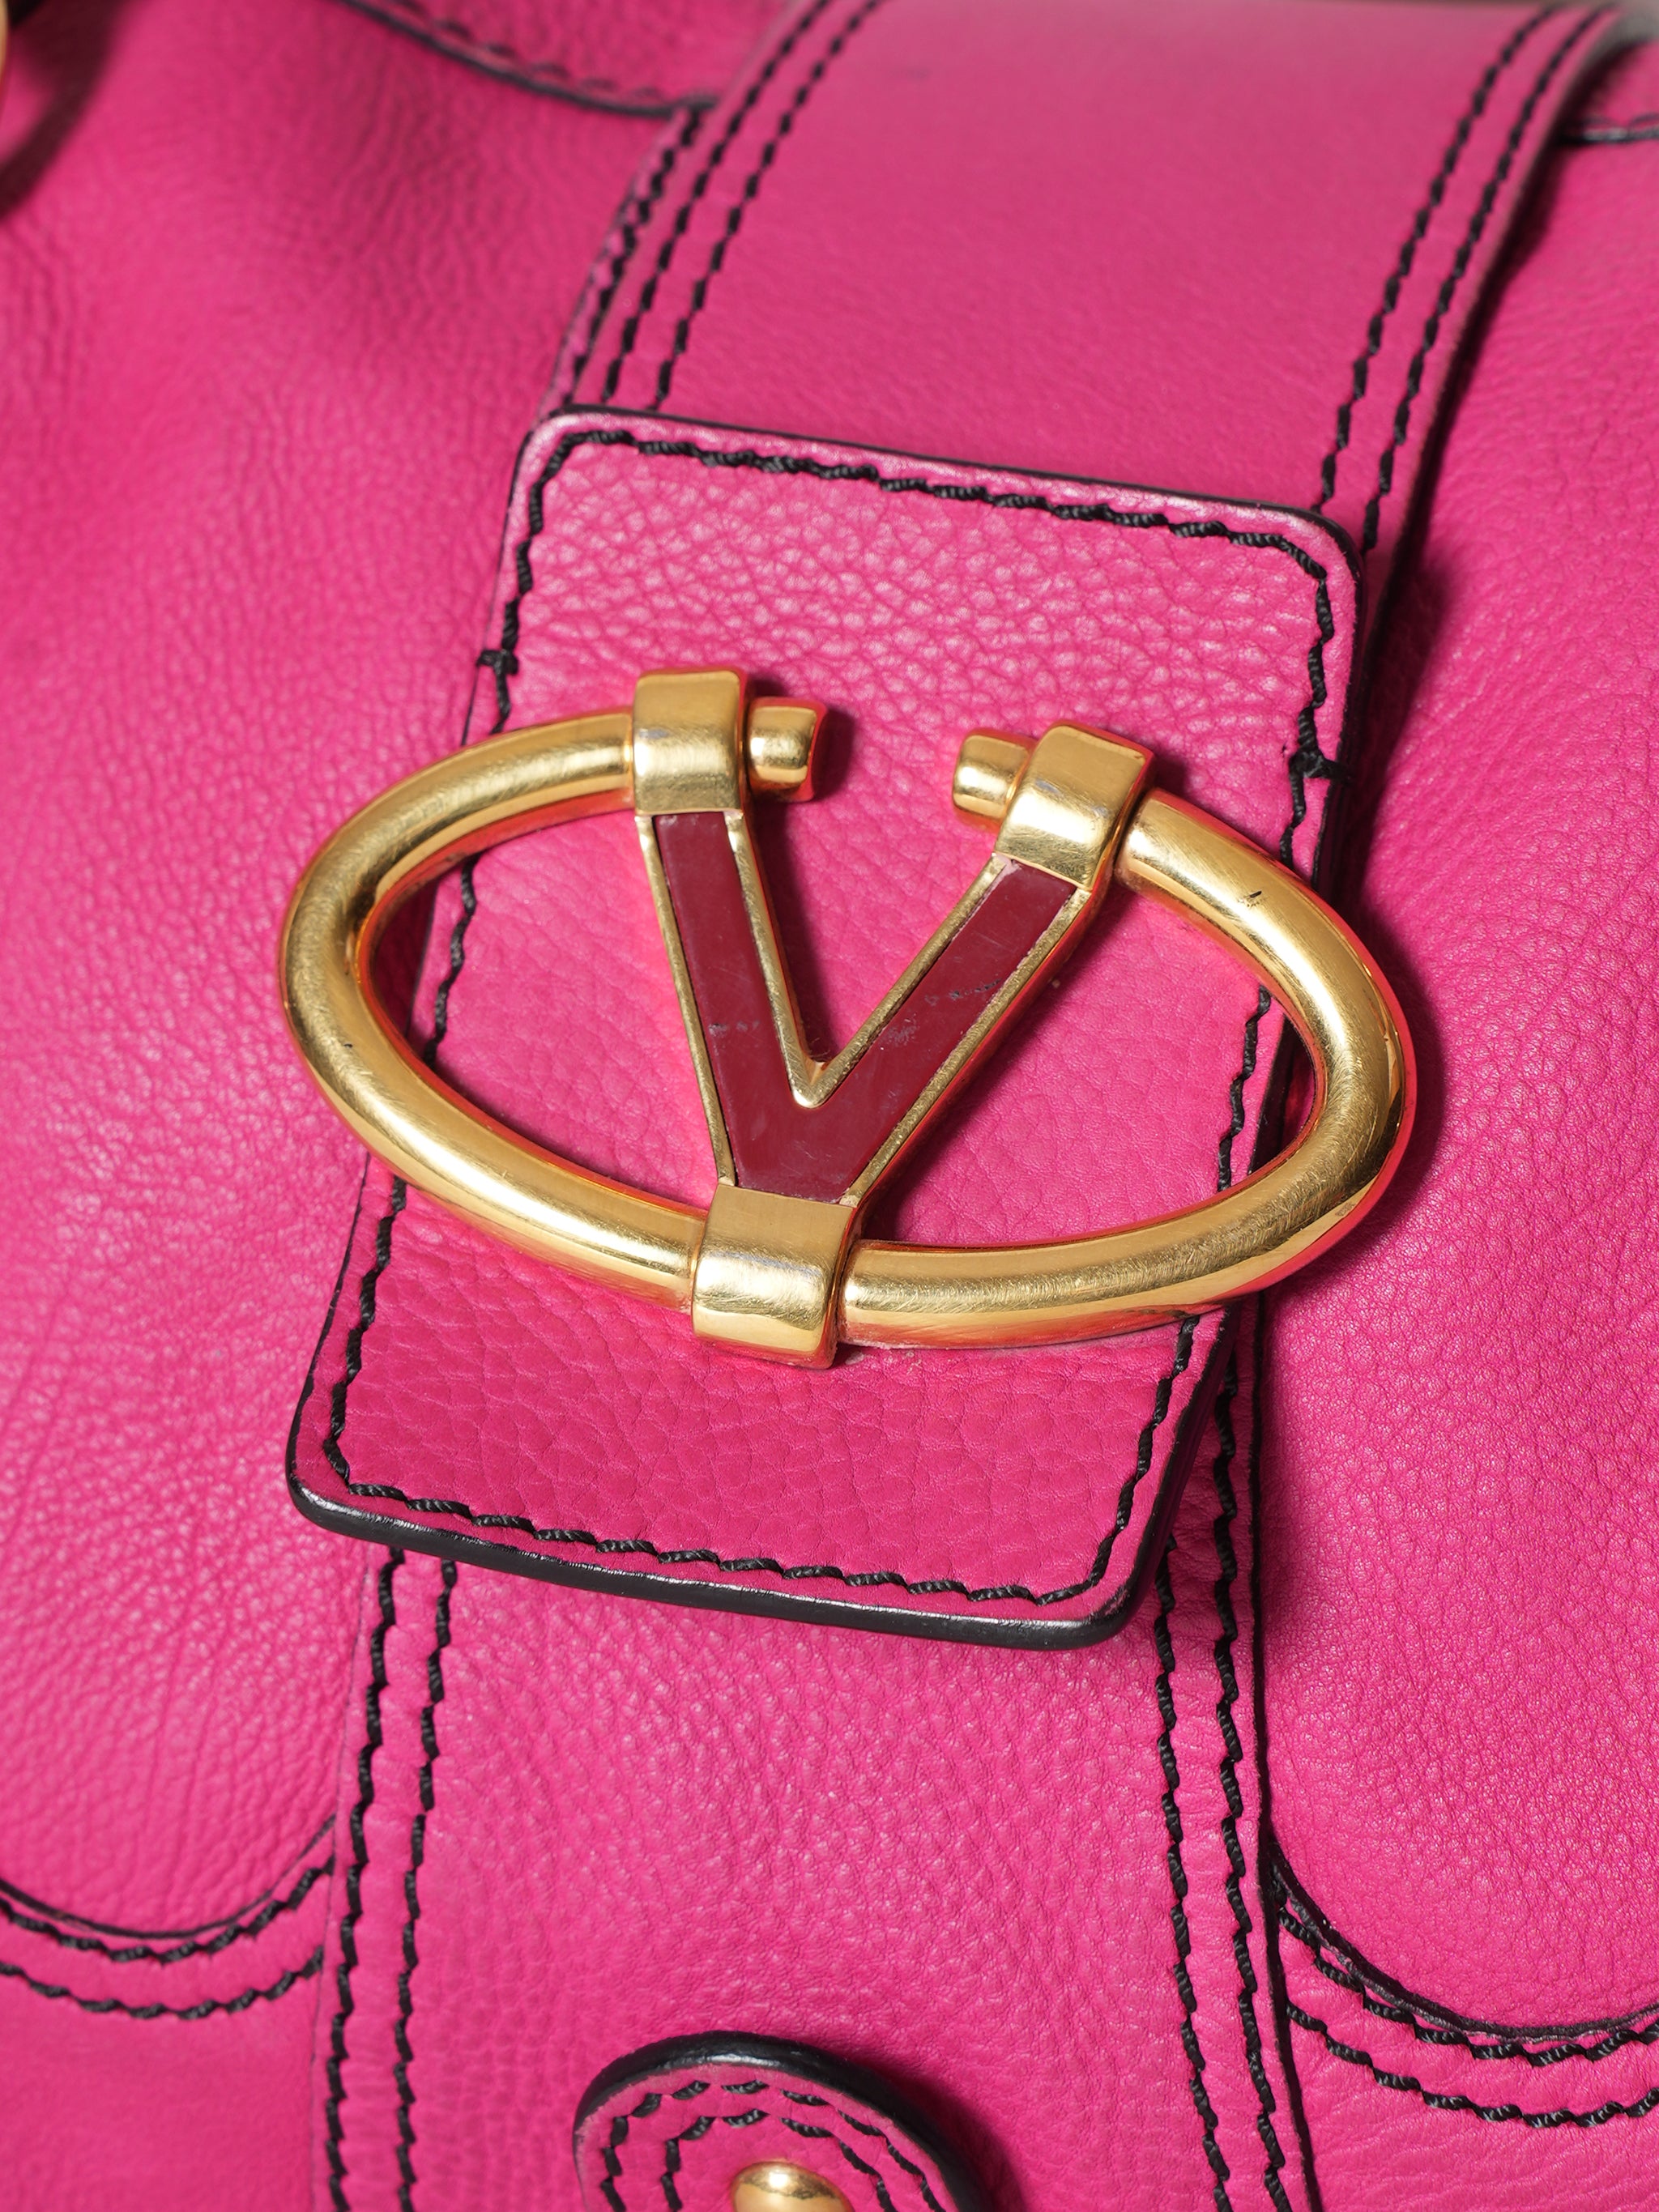 Valentino Pink Top Handle Bag